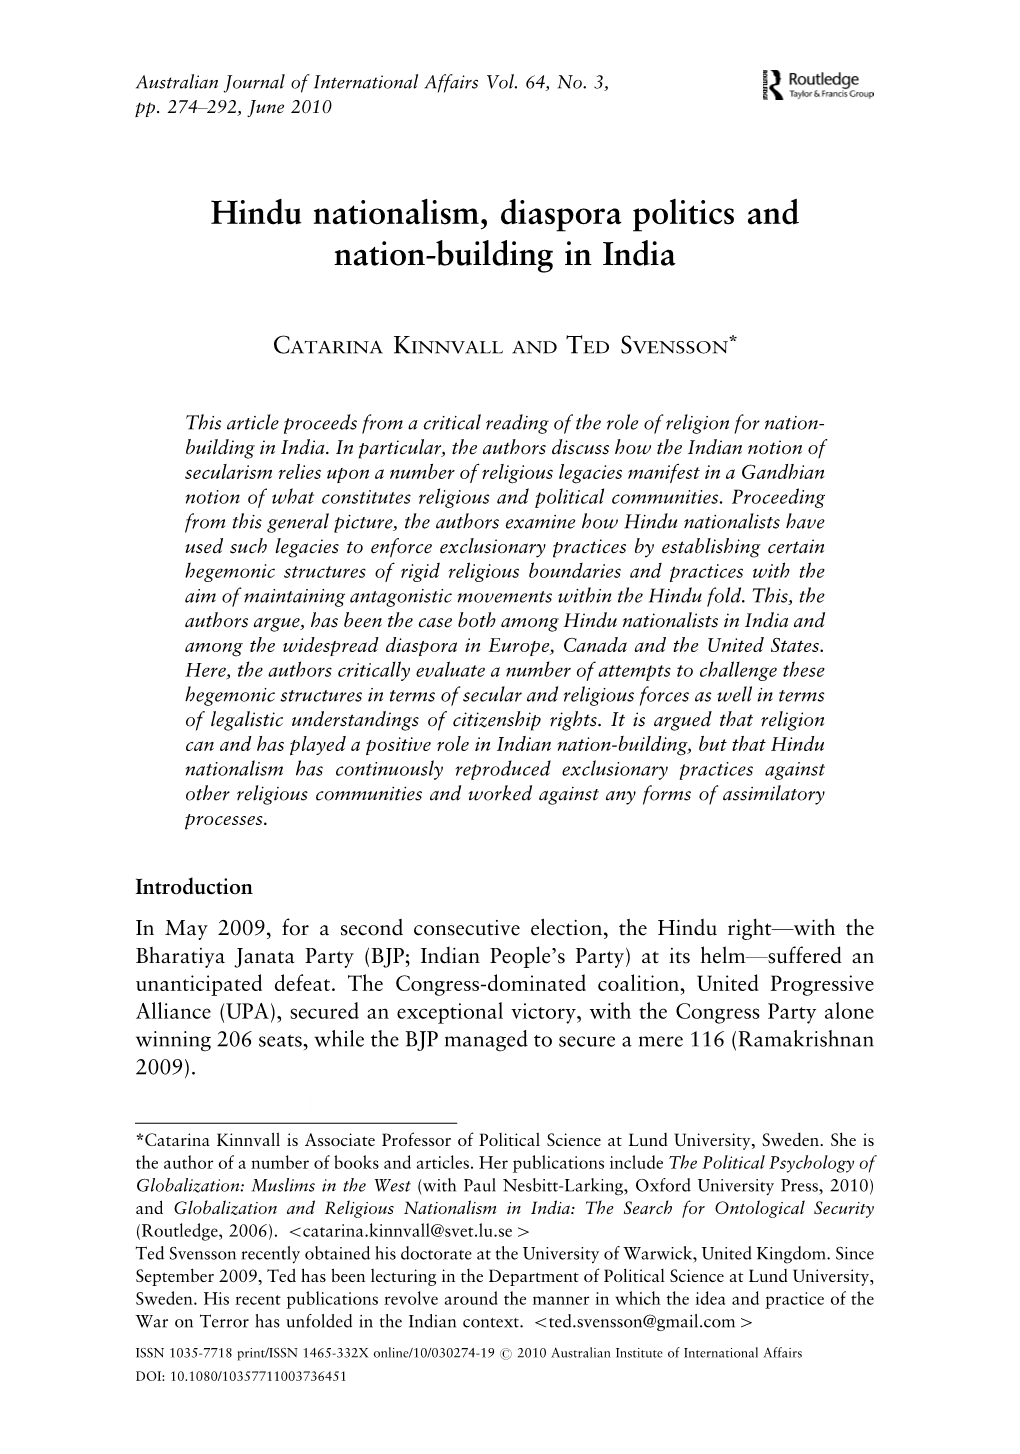 Hindu Nationalism, Diaspora Politics and Nation-Building in India